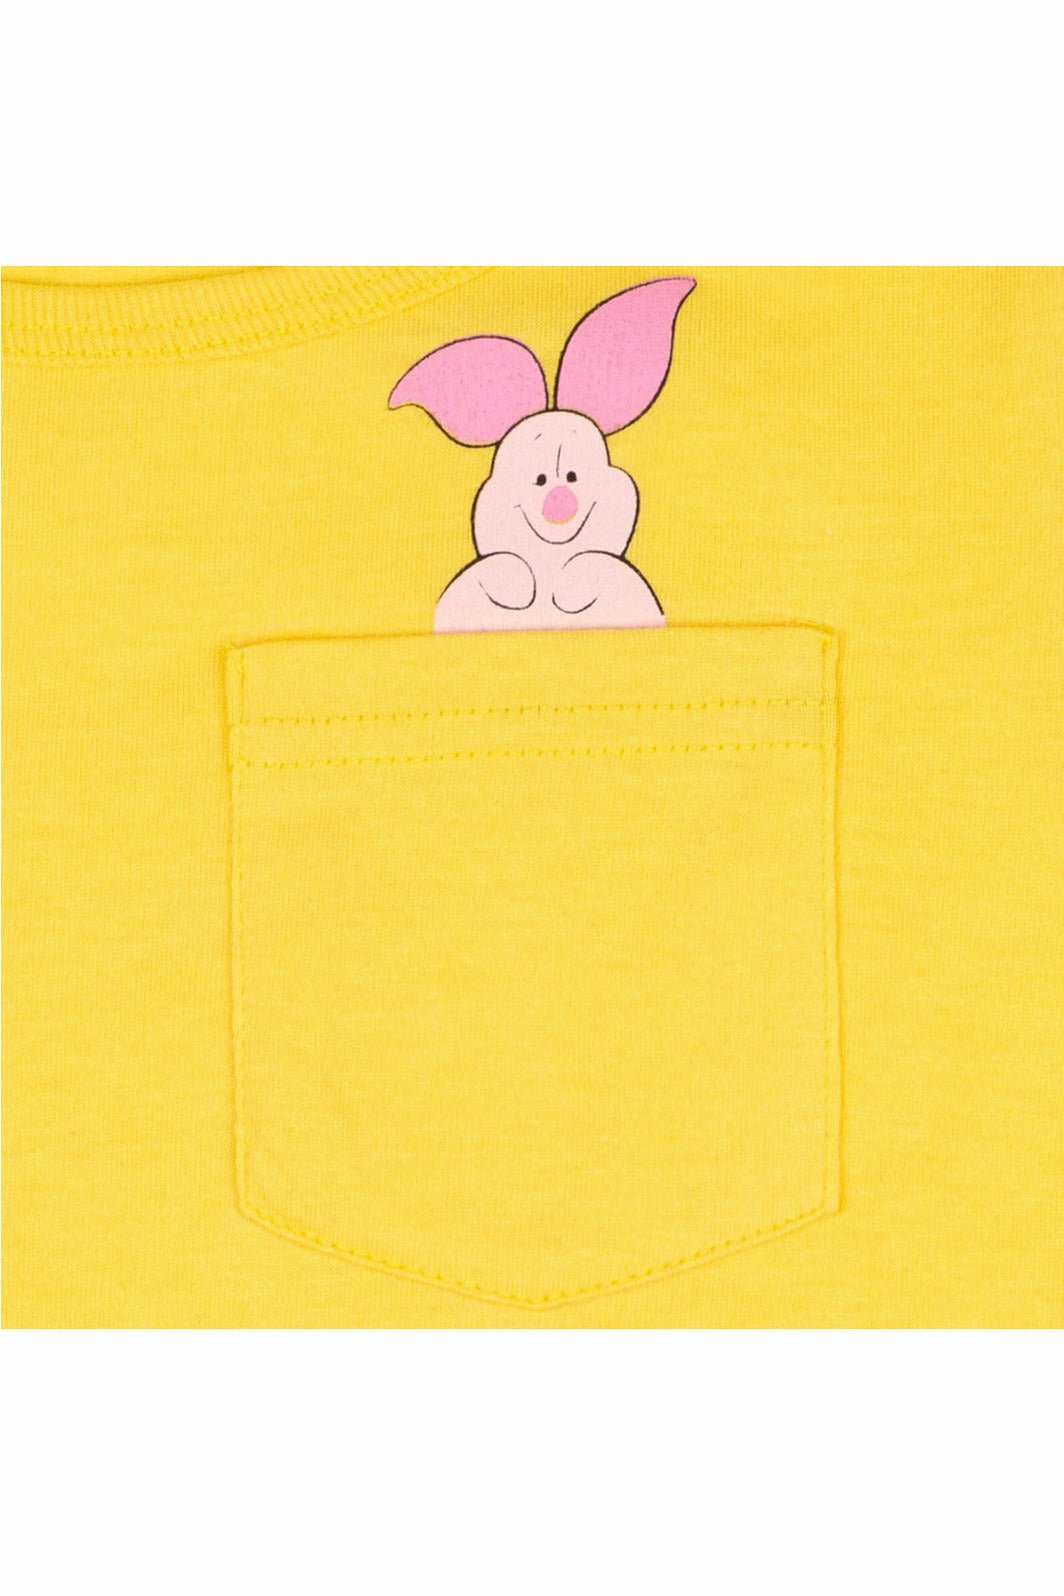 Winnie the Pooh Graphic T-Shirt - imagikids